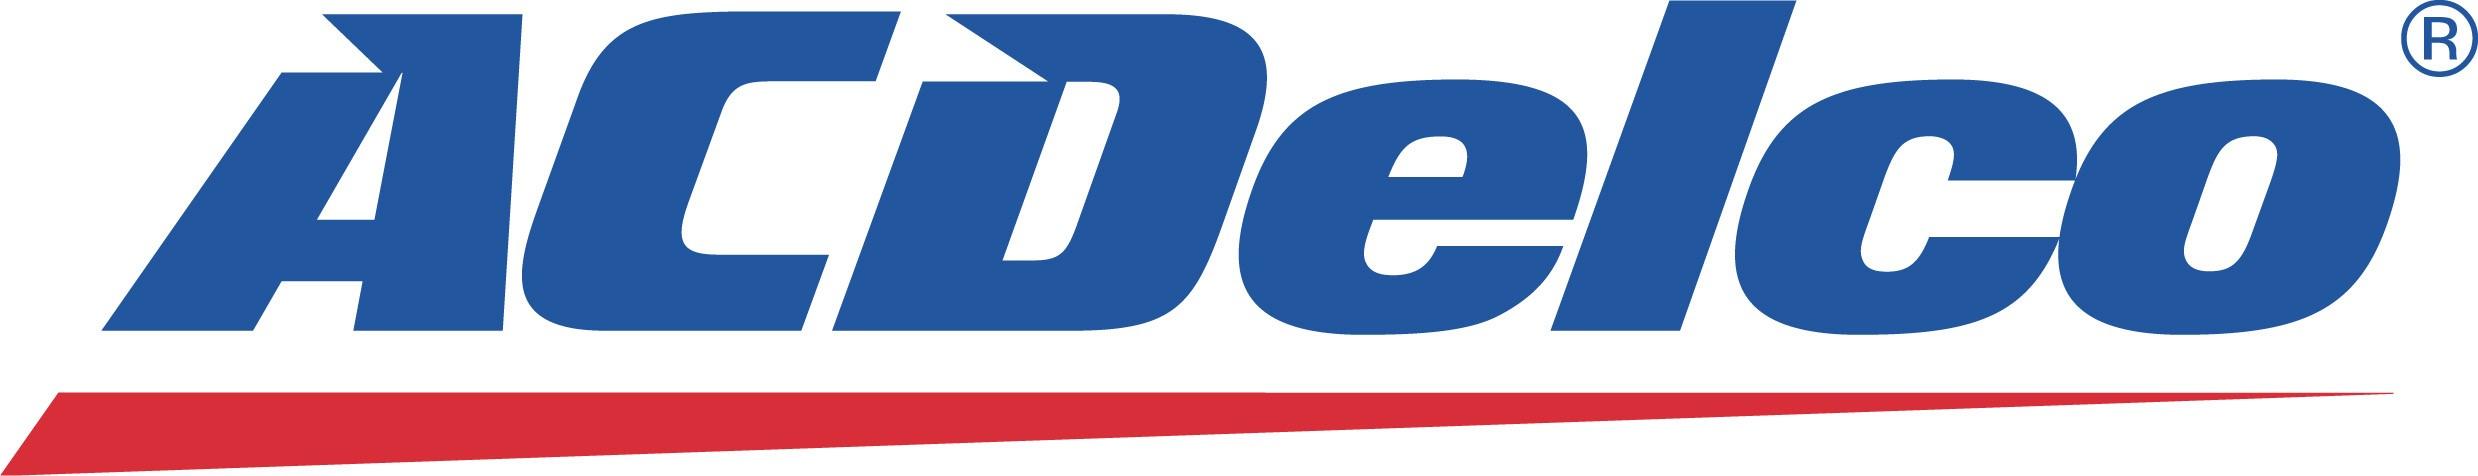 Delco Logo - ac-delco-logo - Tools In Action - Power Tool Reviews